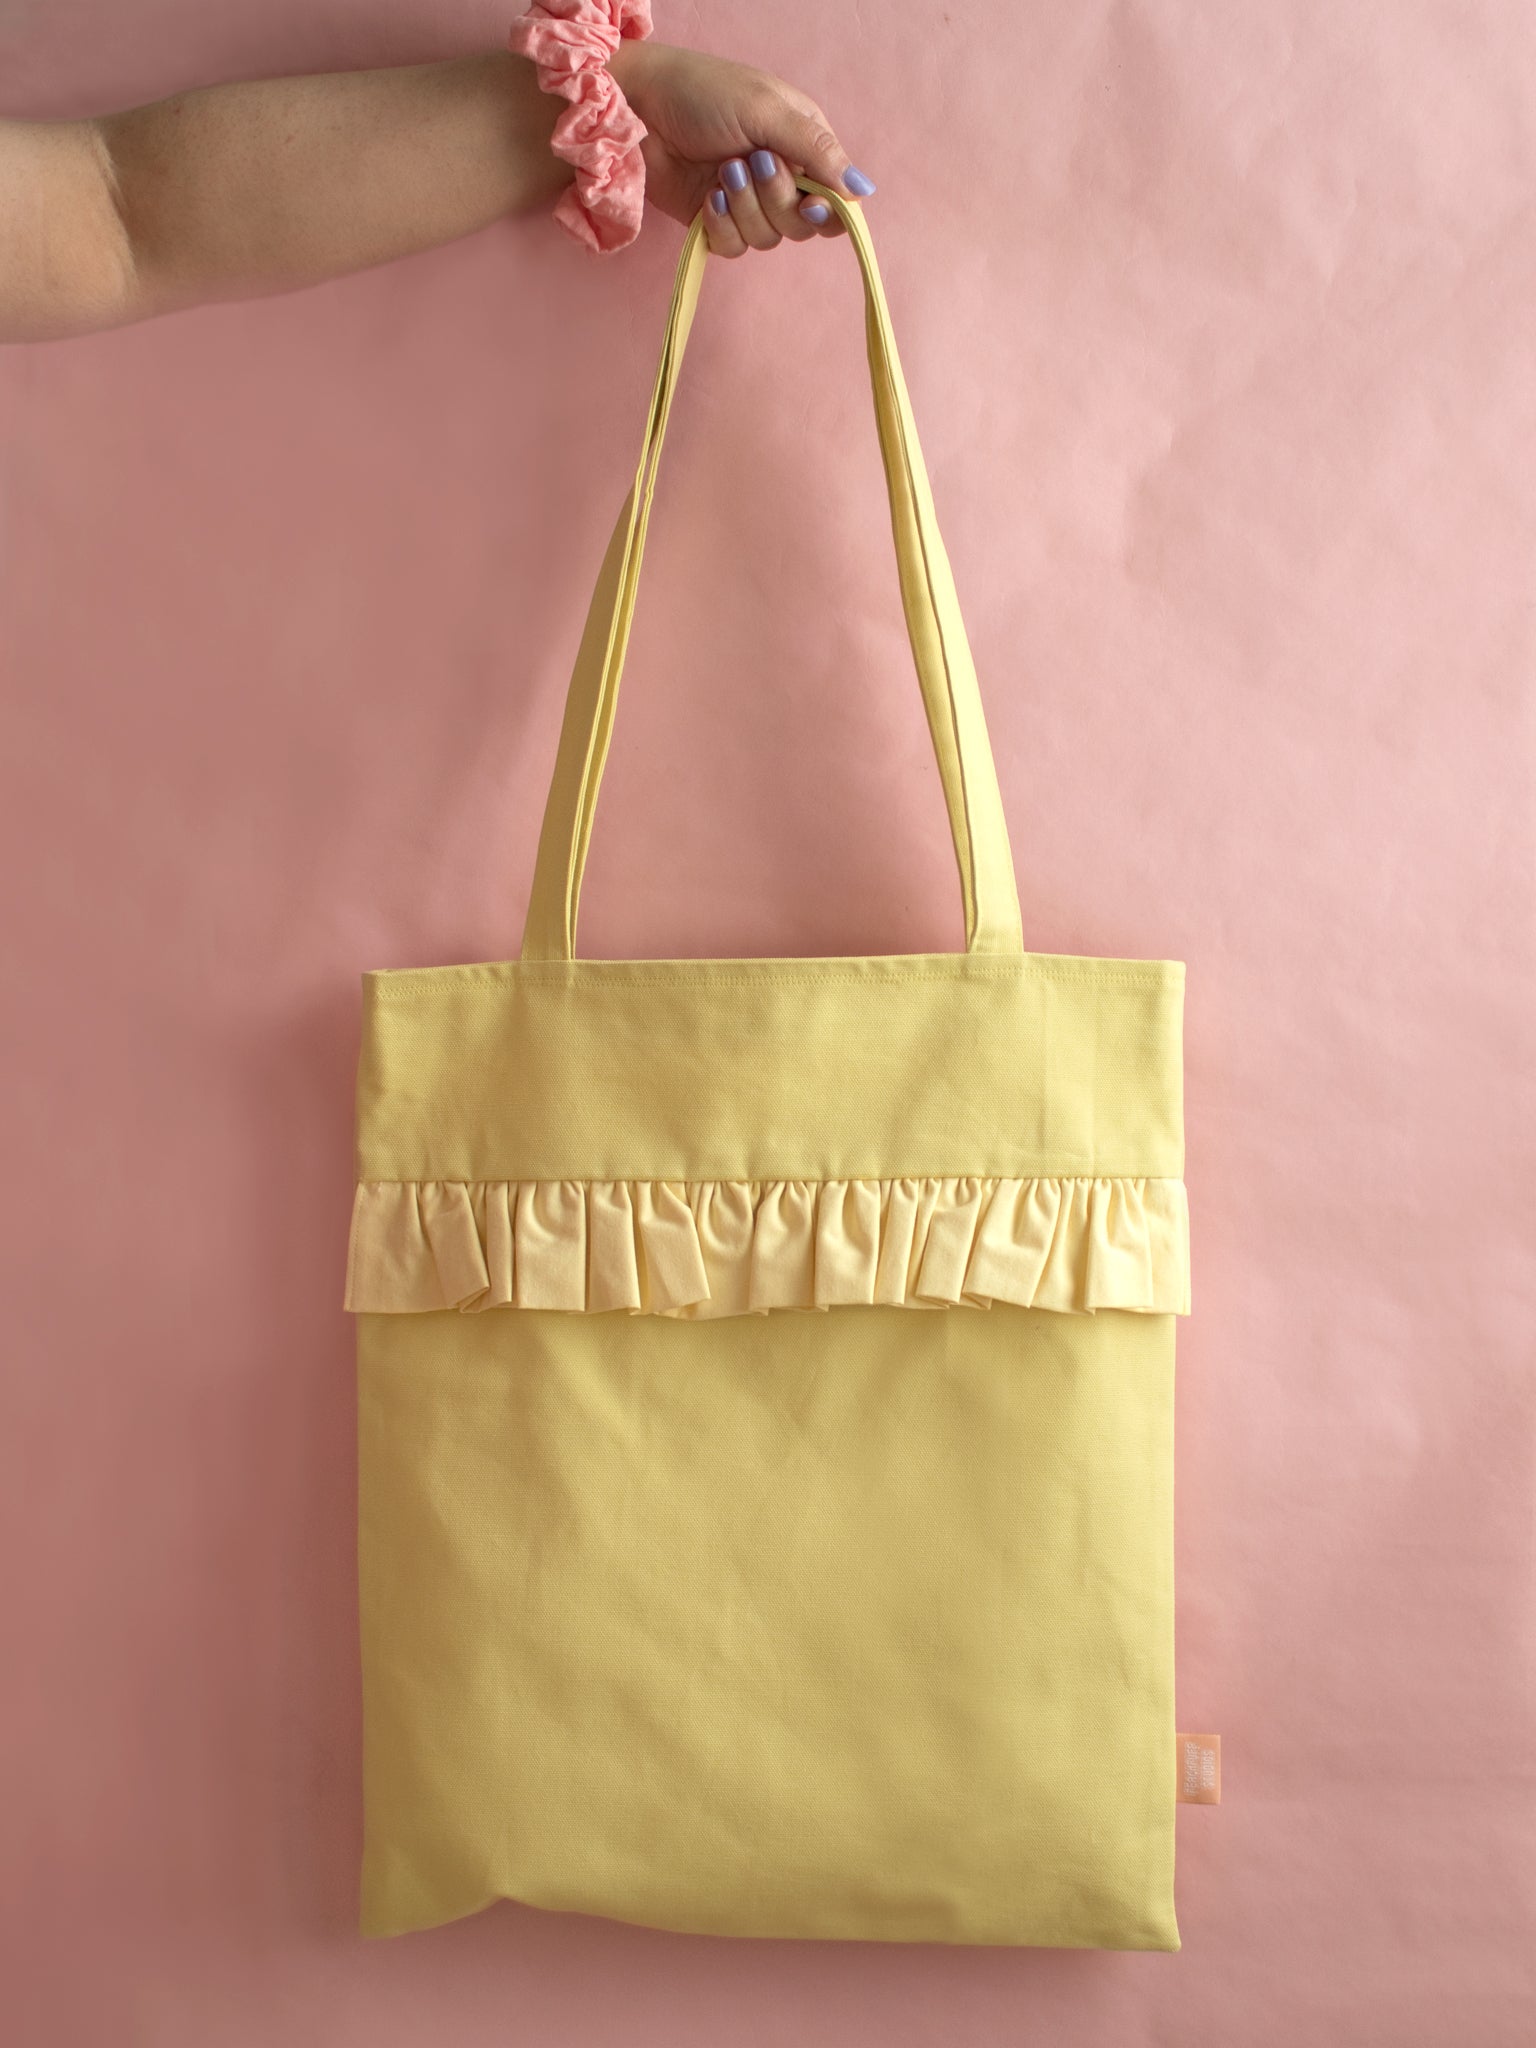 RADLEY Large Cotton Zip Top Tote Shopper Beach Bag Lifes Peachy in Orange:  : Fashion